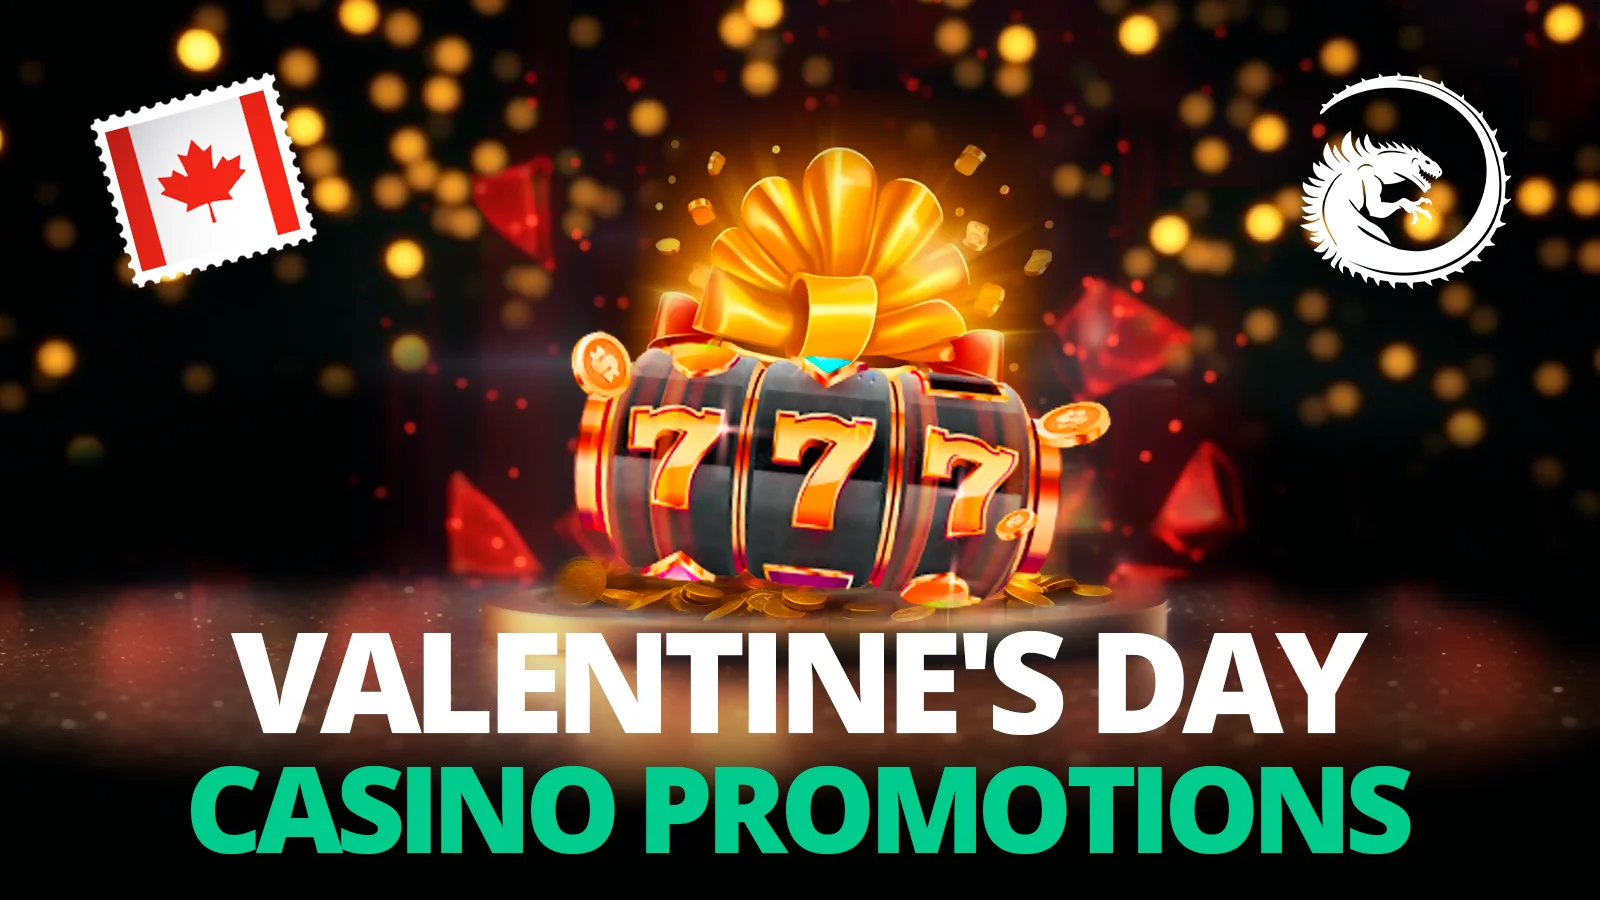 Valentine's Day Casino Promotions